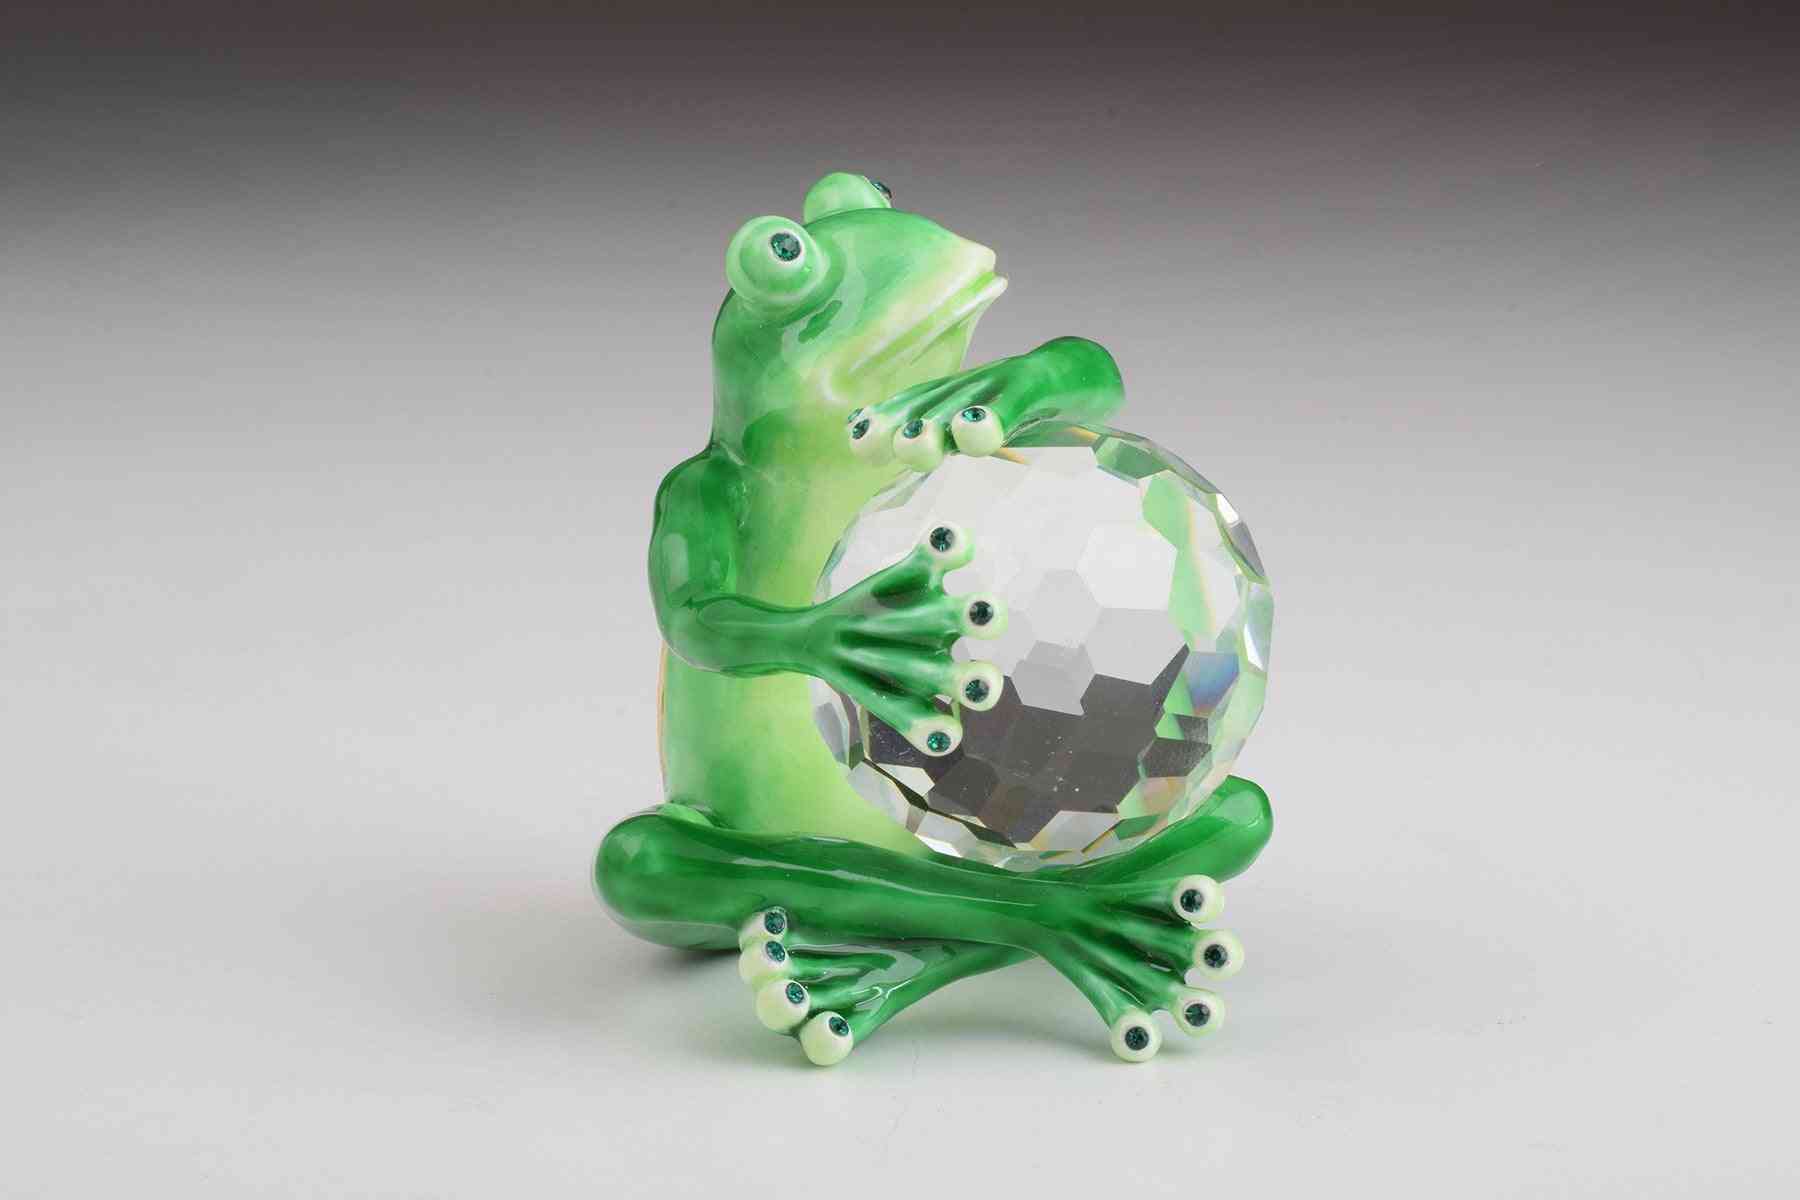 Rana verde con bola de cristal - caja de baratijas